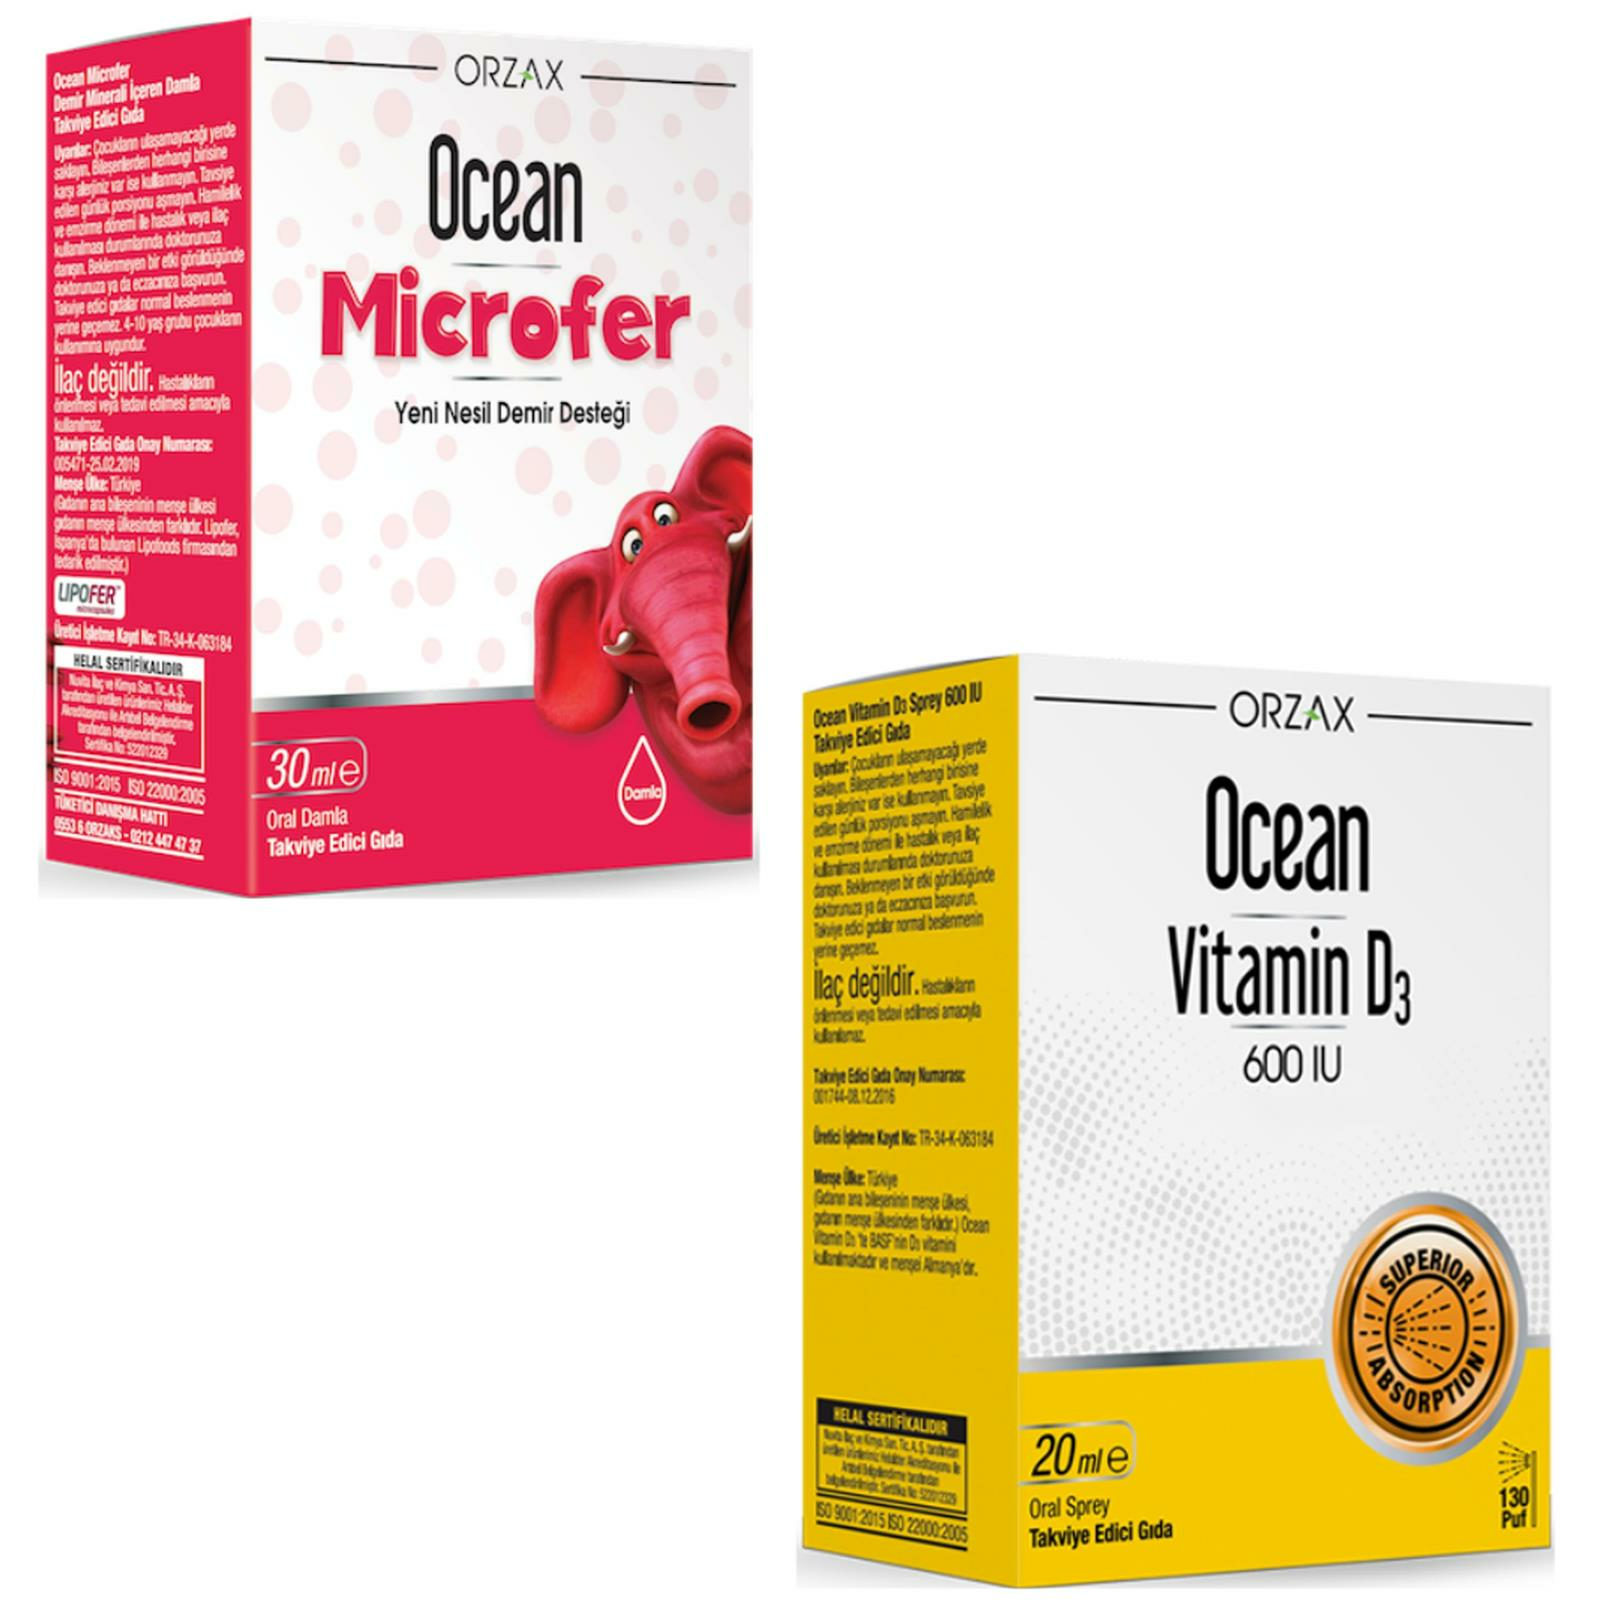 Ocean Microfer Damla 30 ml + Ocean Vitamin D3 600 IU Sprey 20 ml